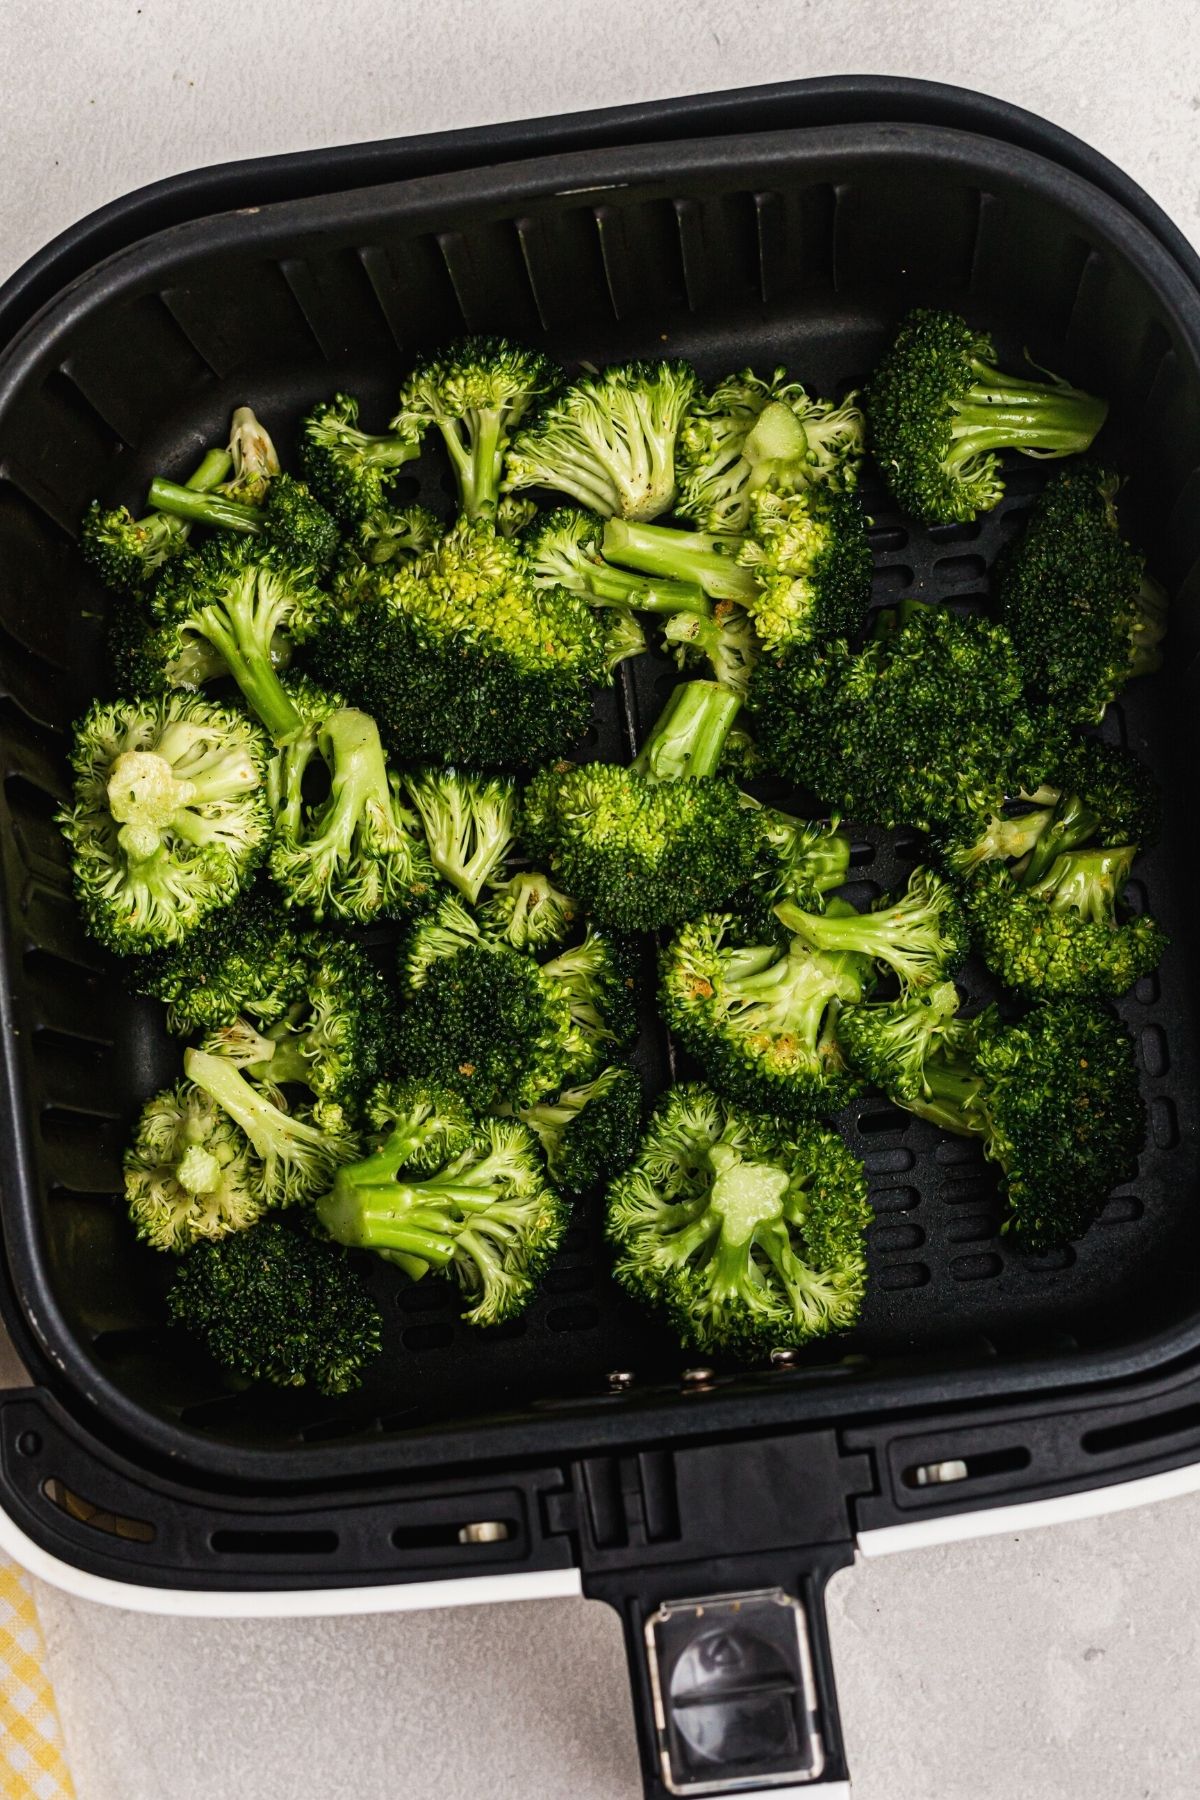 Uncooked seasoned broccoli florets in the air fryer basket